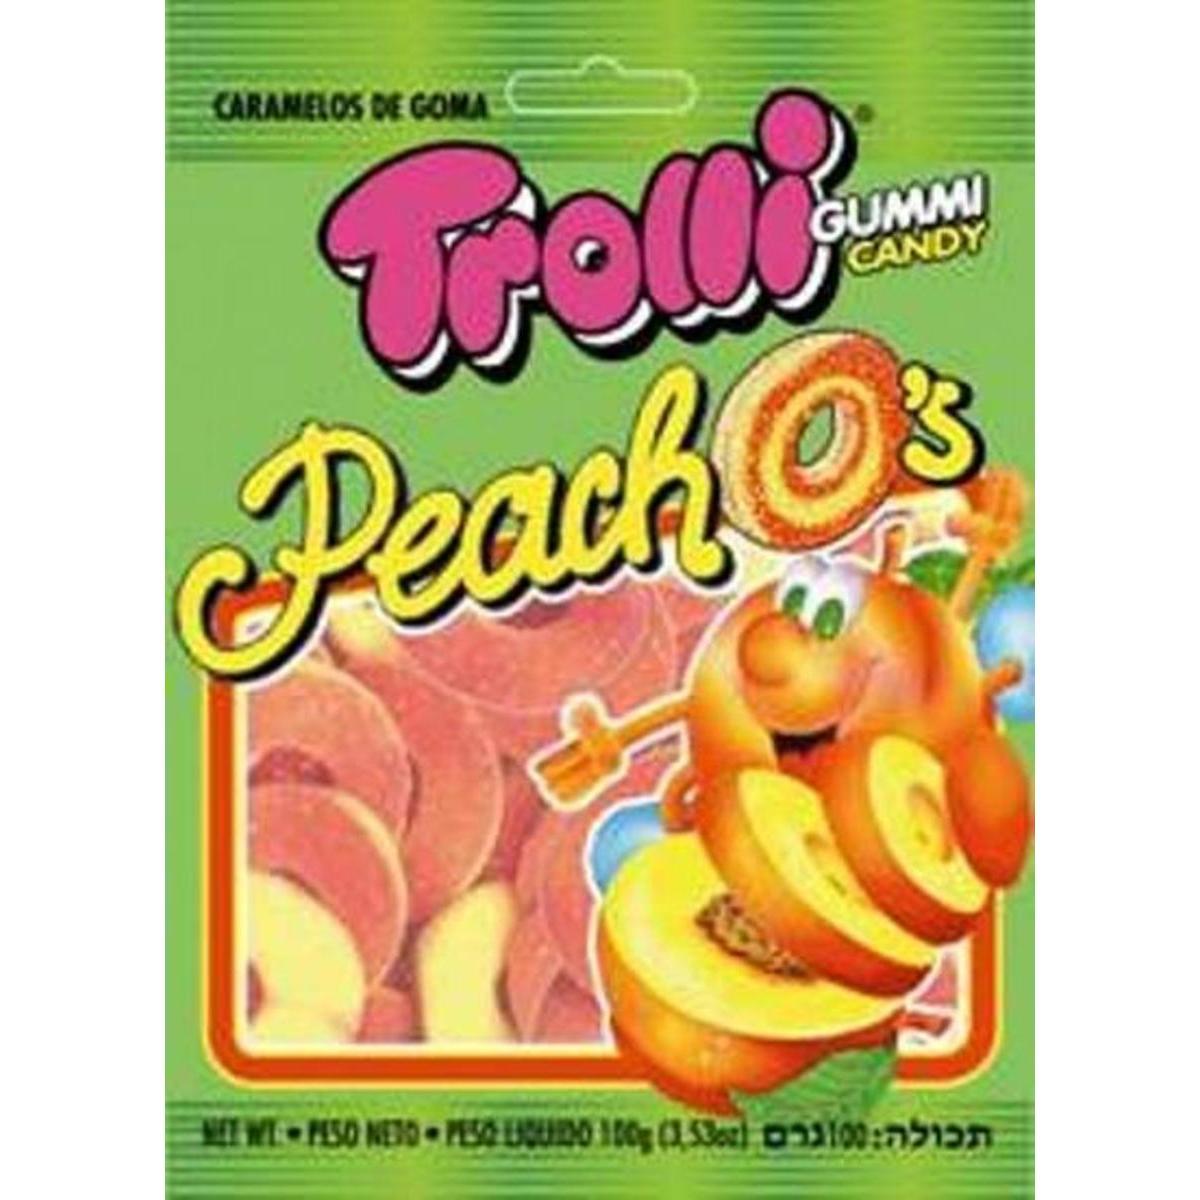 Bonbons Peachos - 100 g - Multicolore - TROLLI